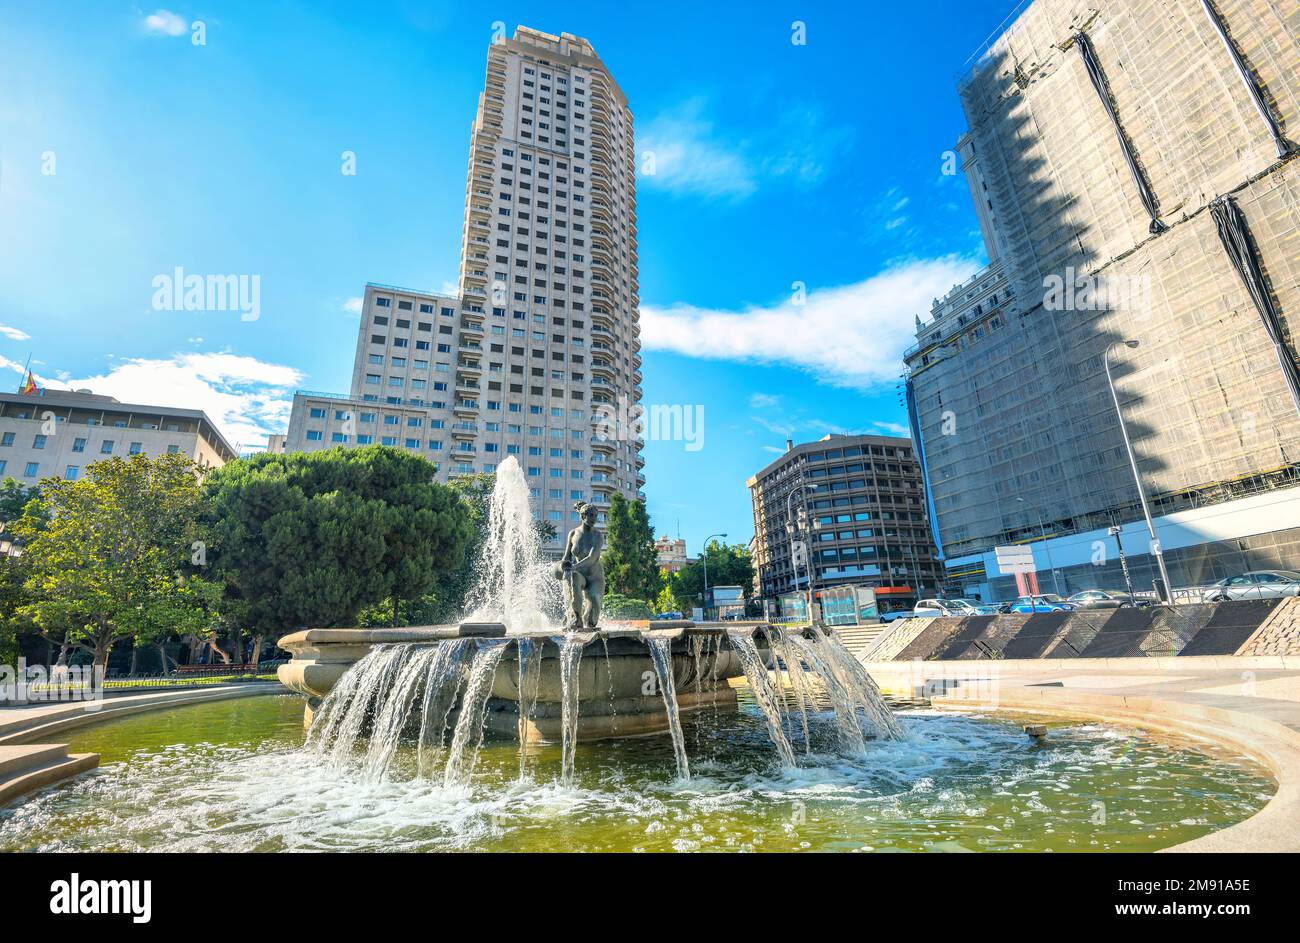 Cityscape with fountain of Water’s Birth on  Plaza de Espana. Madrid, Spain Stock Photo